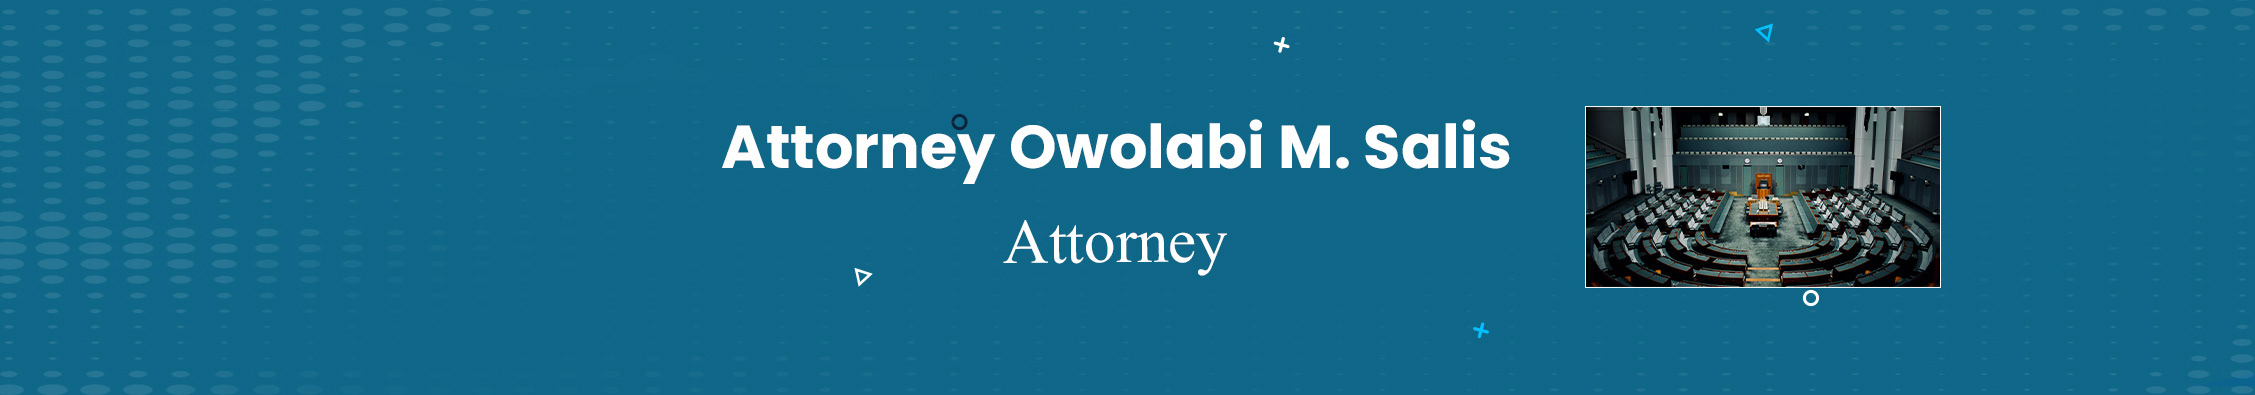 Attorney Owolabi M. Salis's profile banner